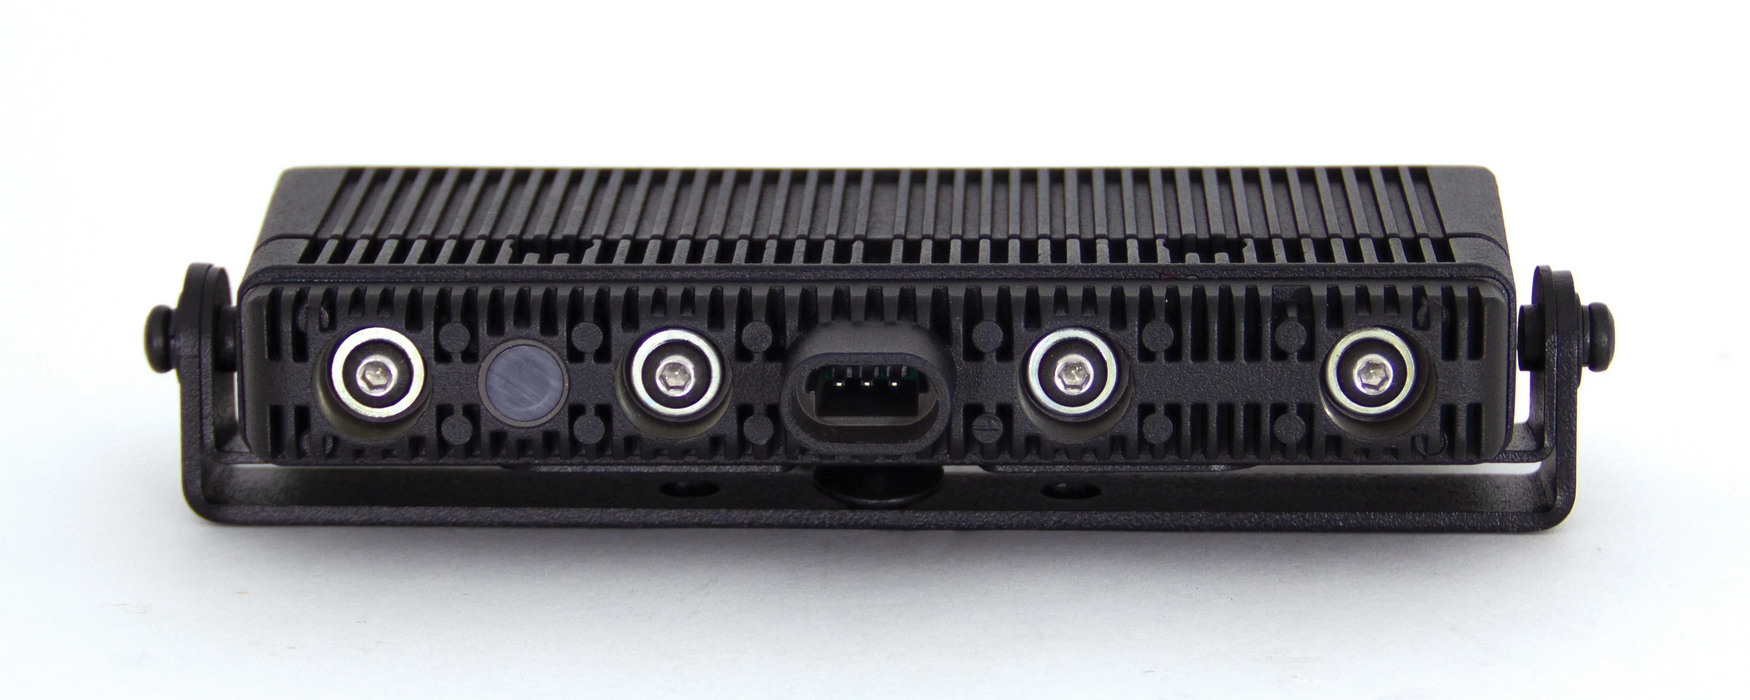 SoundOff Signal mpower   HP 6×1 Light Kit, Includes (1) Light, (1) U- Shaped bracket with Mounting H